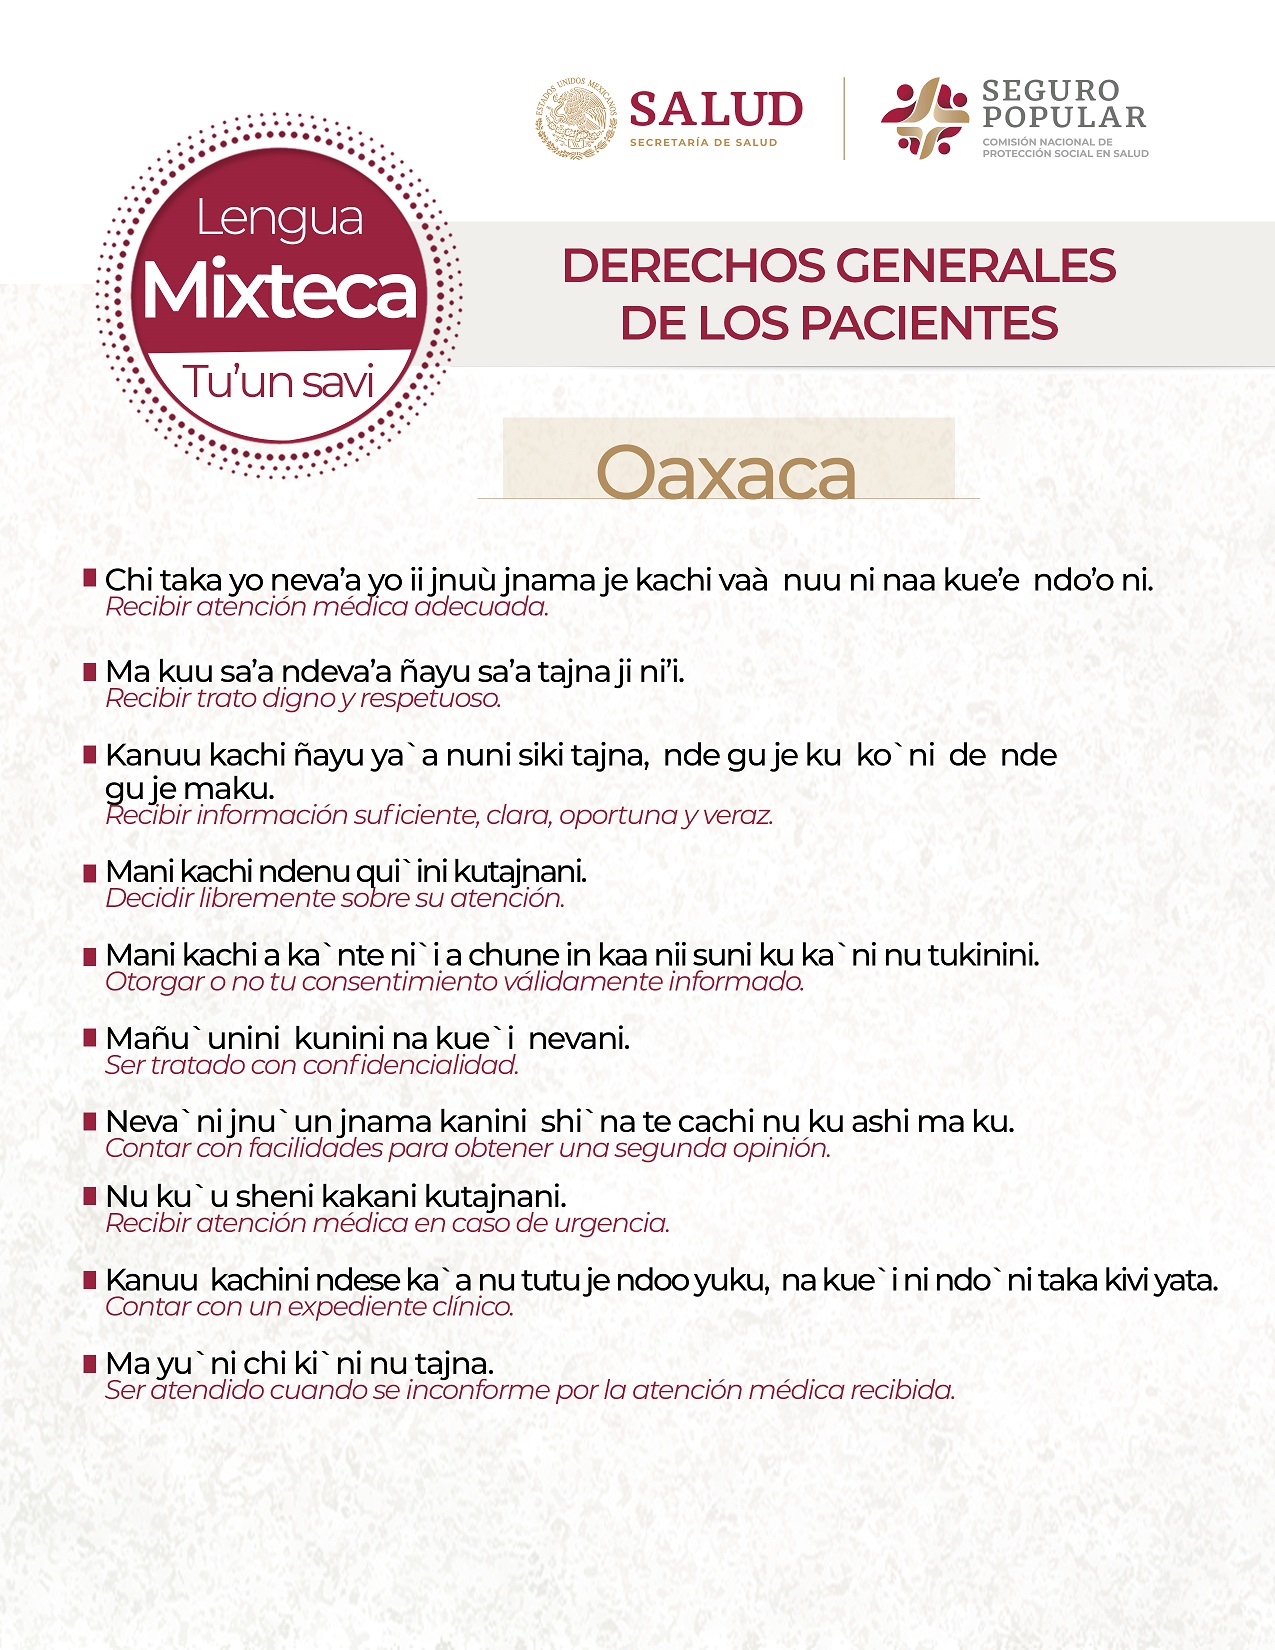 /cms/uploads/image/file/541117/Lengua-Mixteca-Oaxaca_traducido.jpg